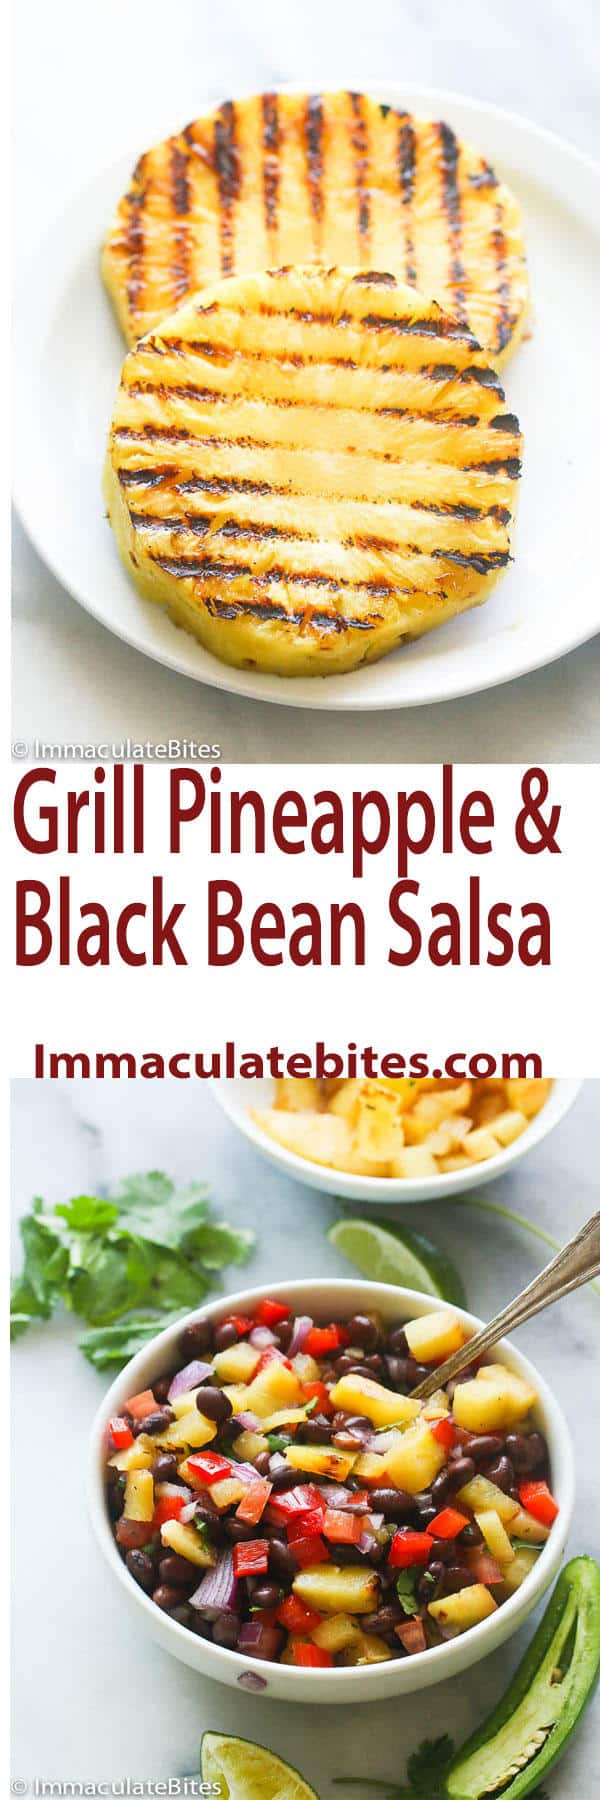 Grill Pineapple Black Bean Salsa